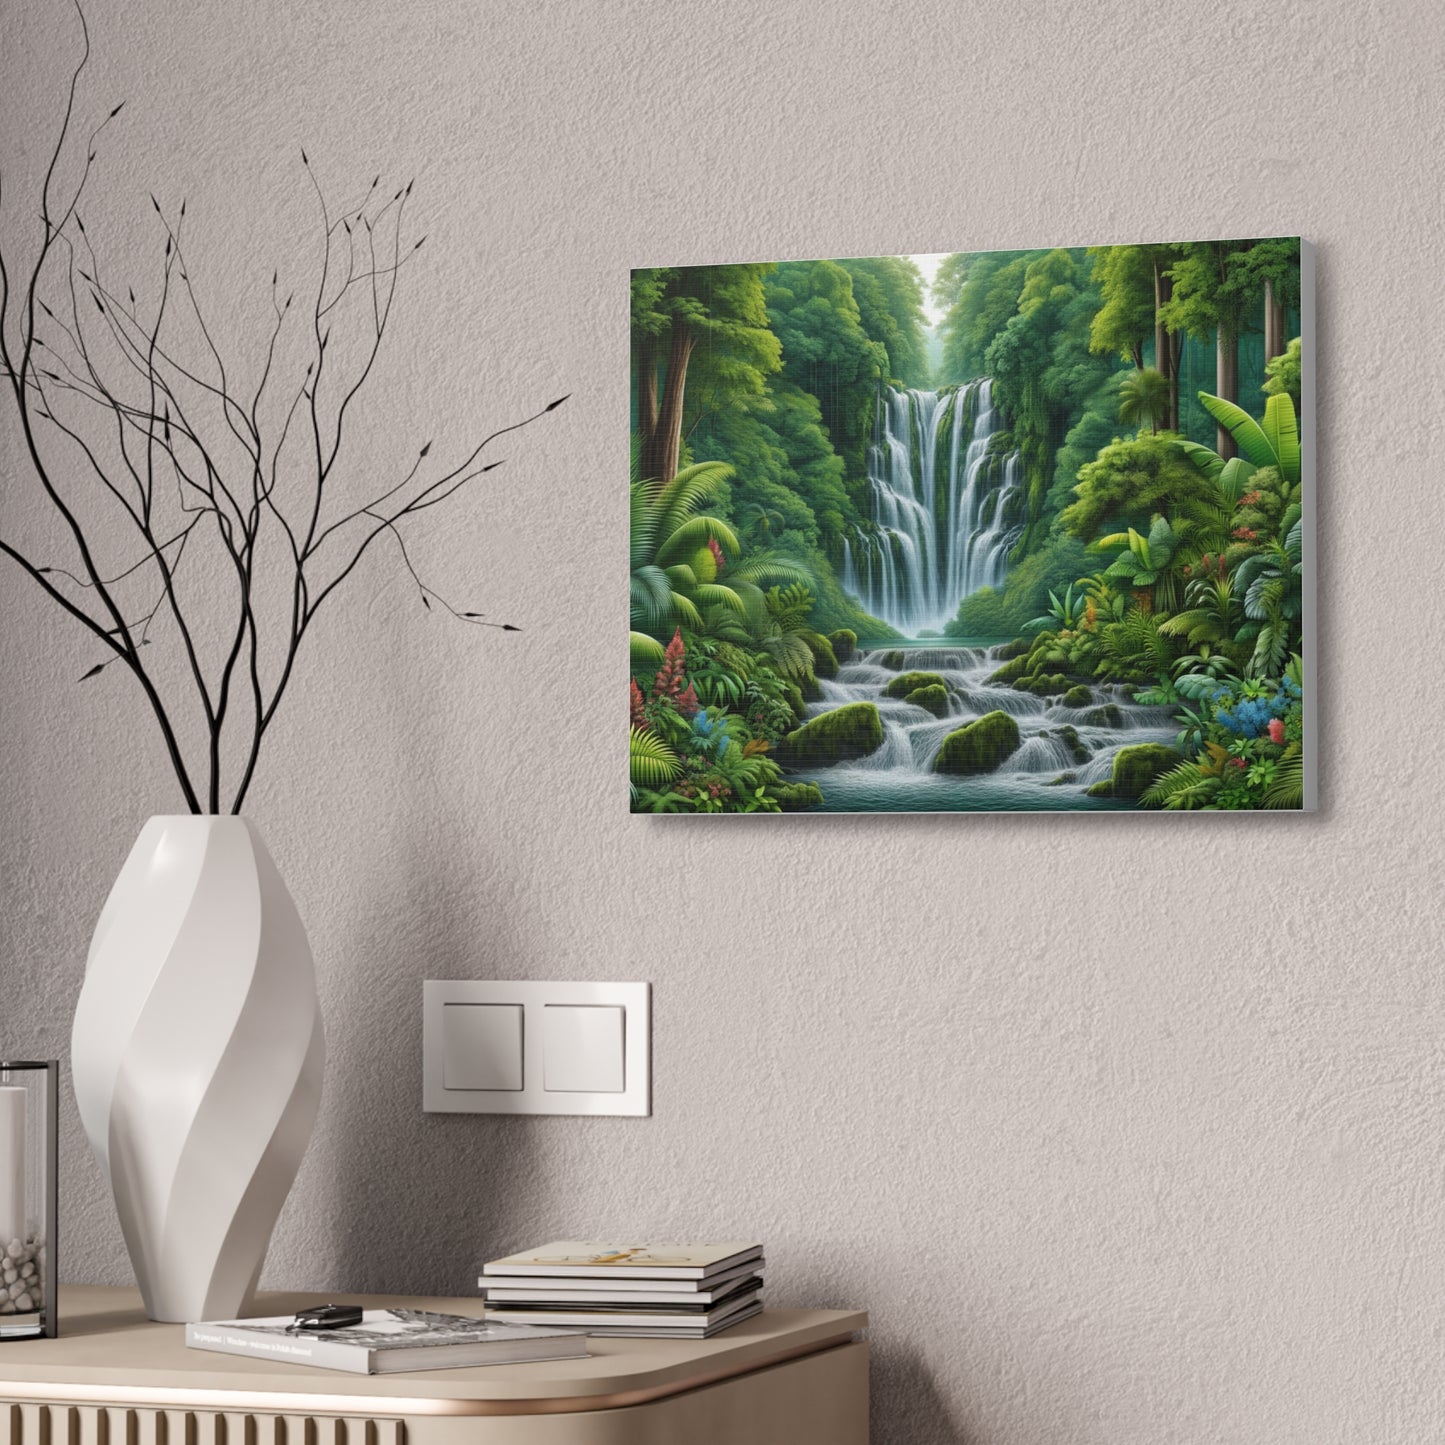 Tropical Rainforest Oasis Canvas Art - Hyper-Realistic Waterfall Scene